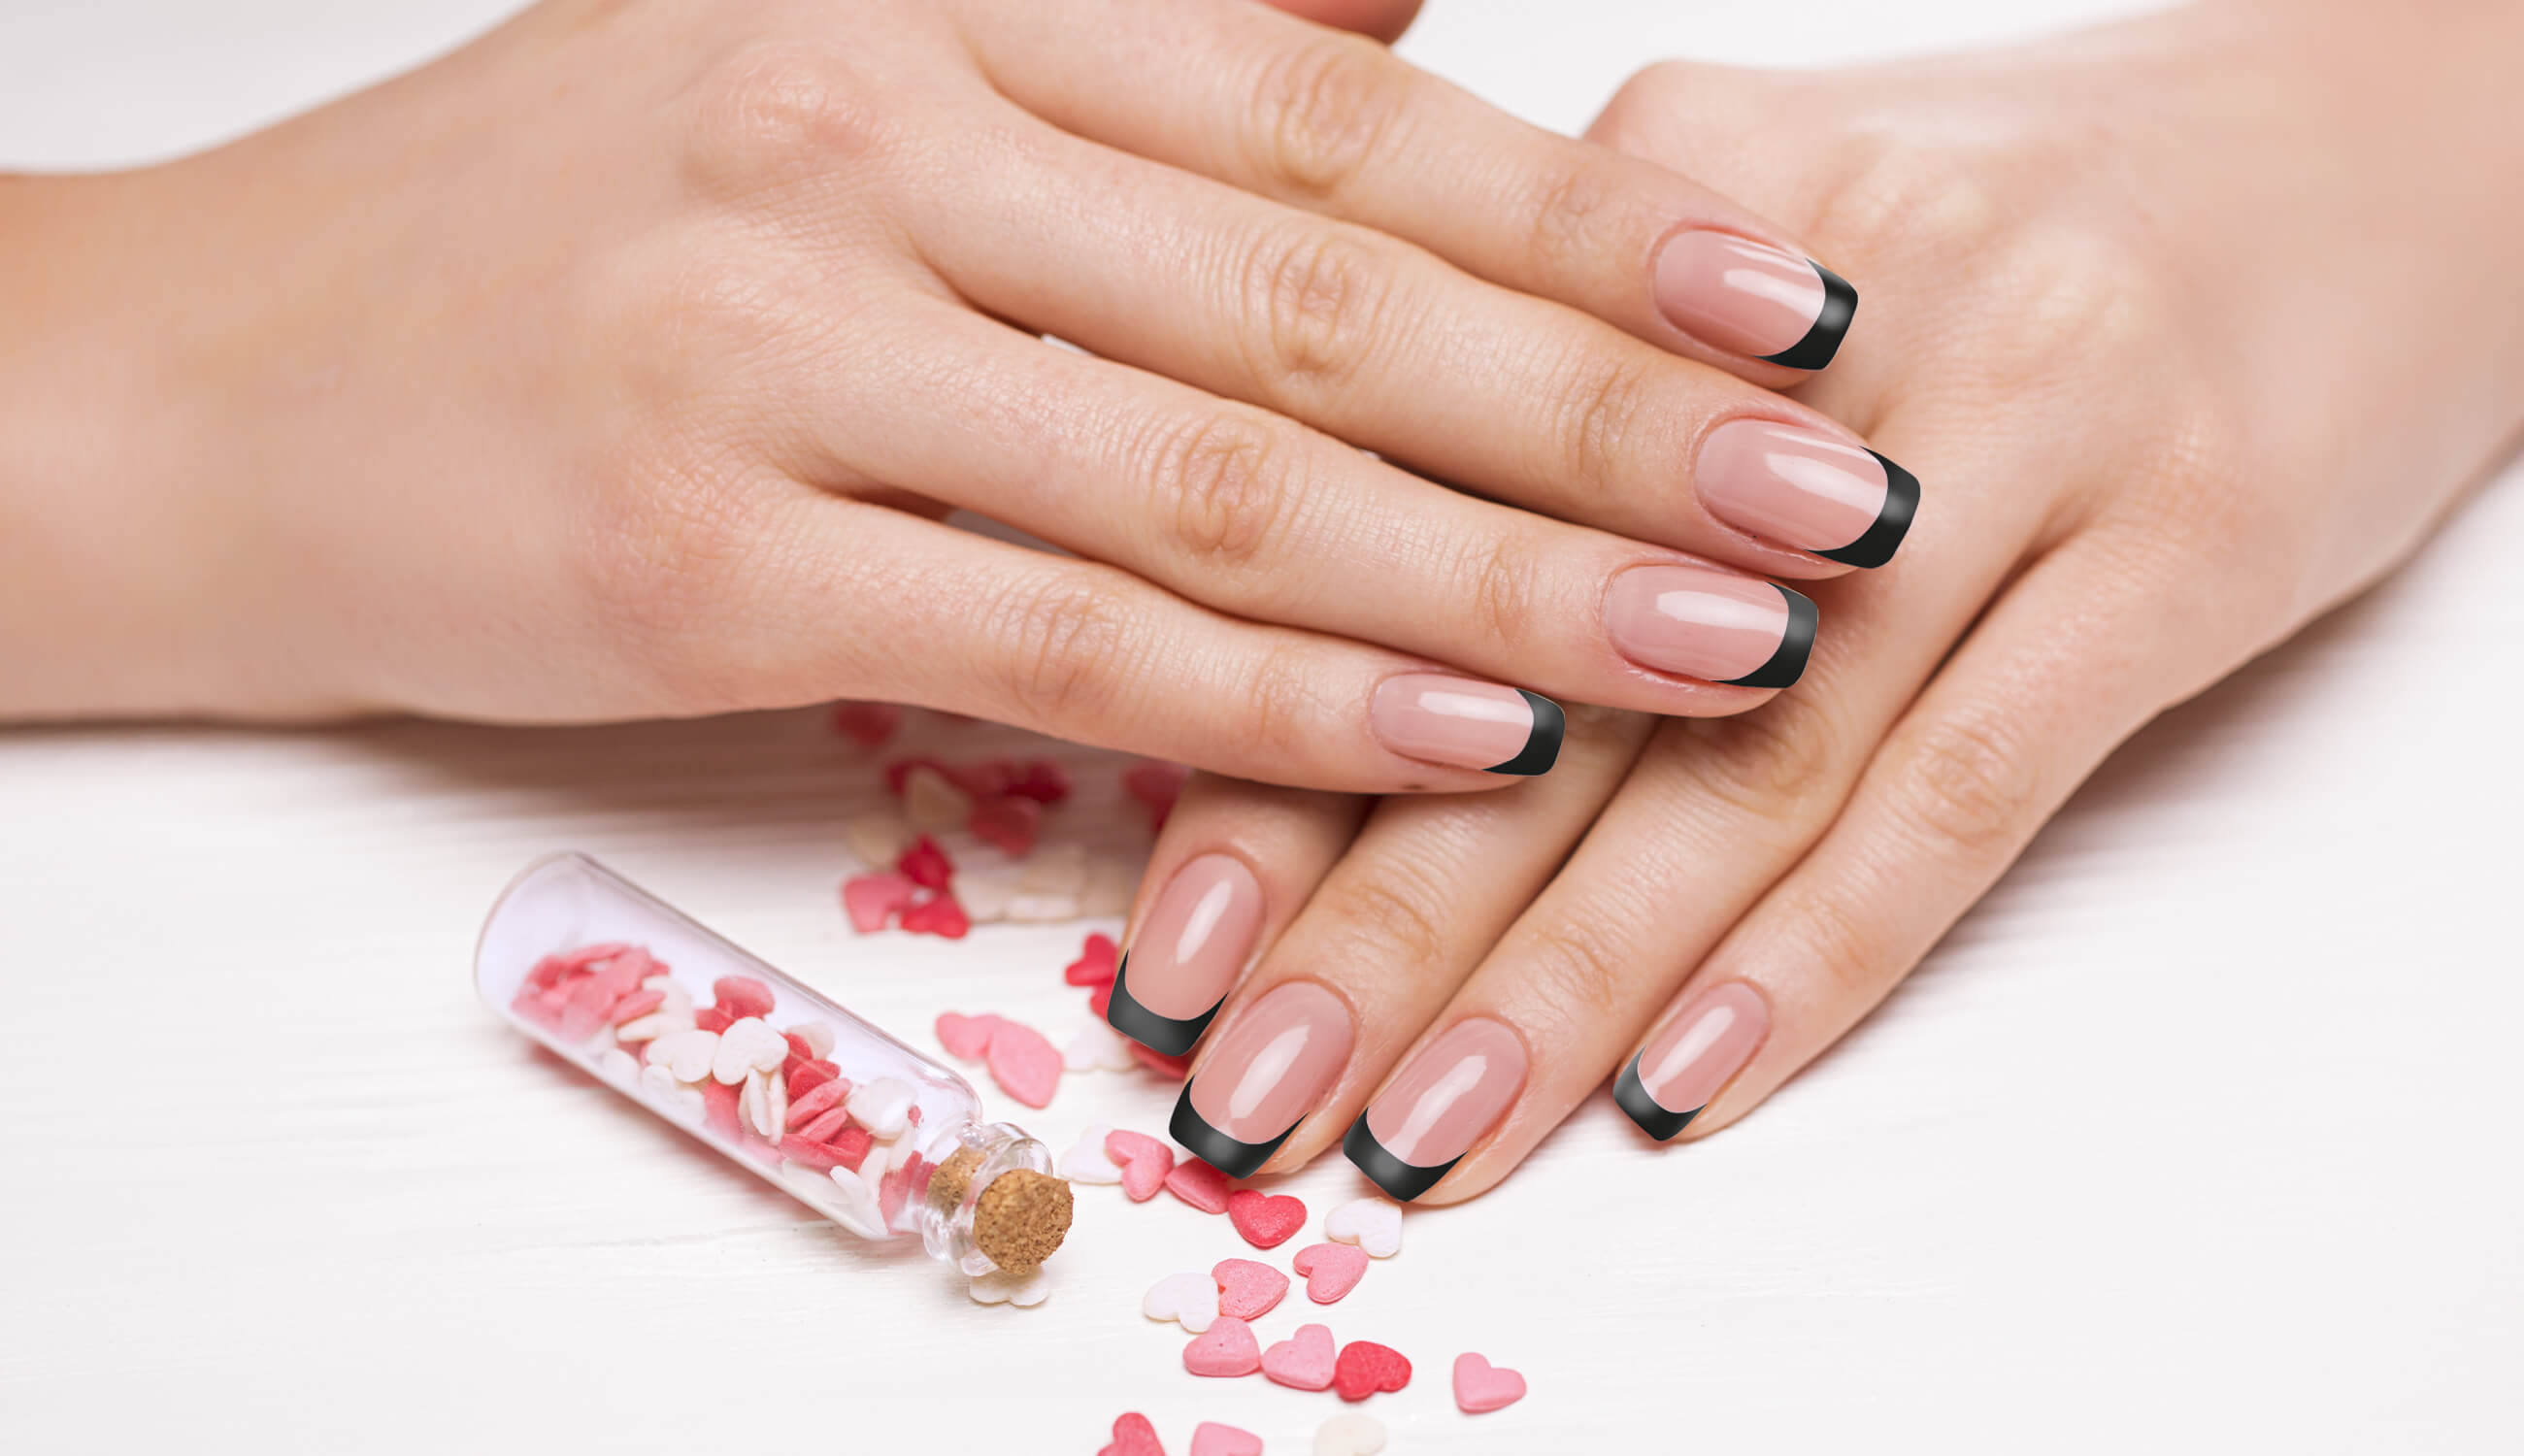 main_nails with dark french tips.jpg